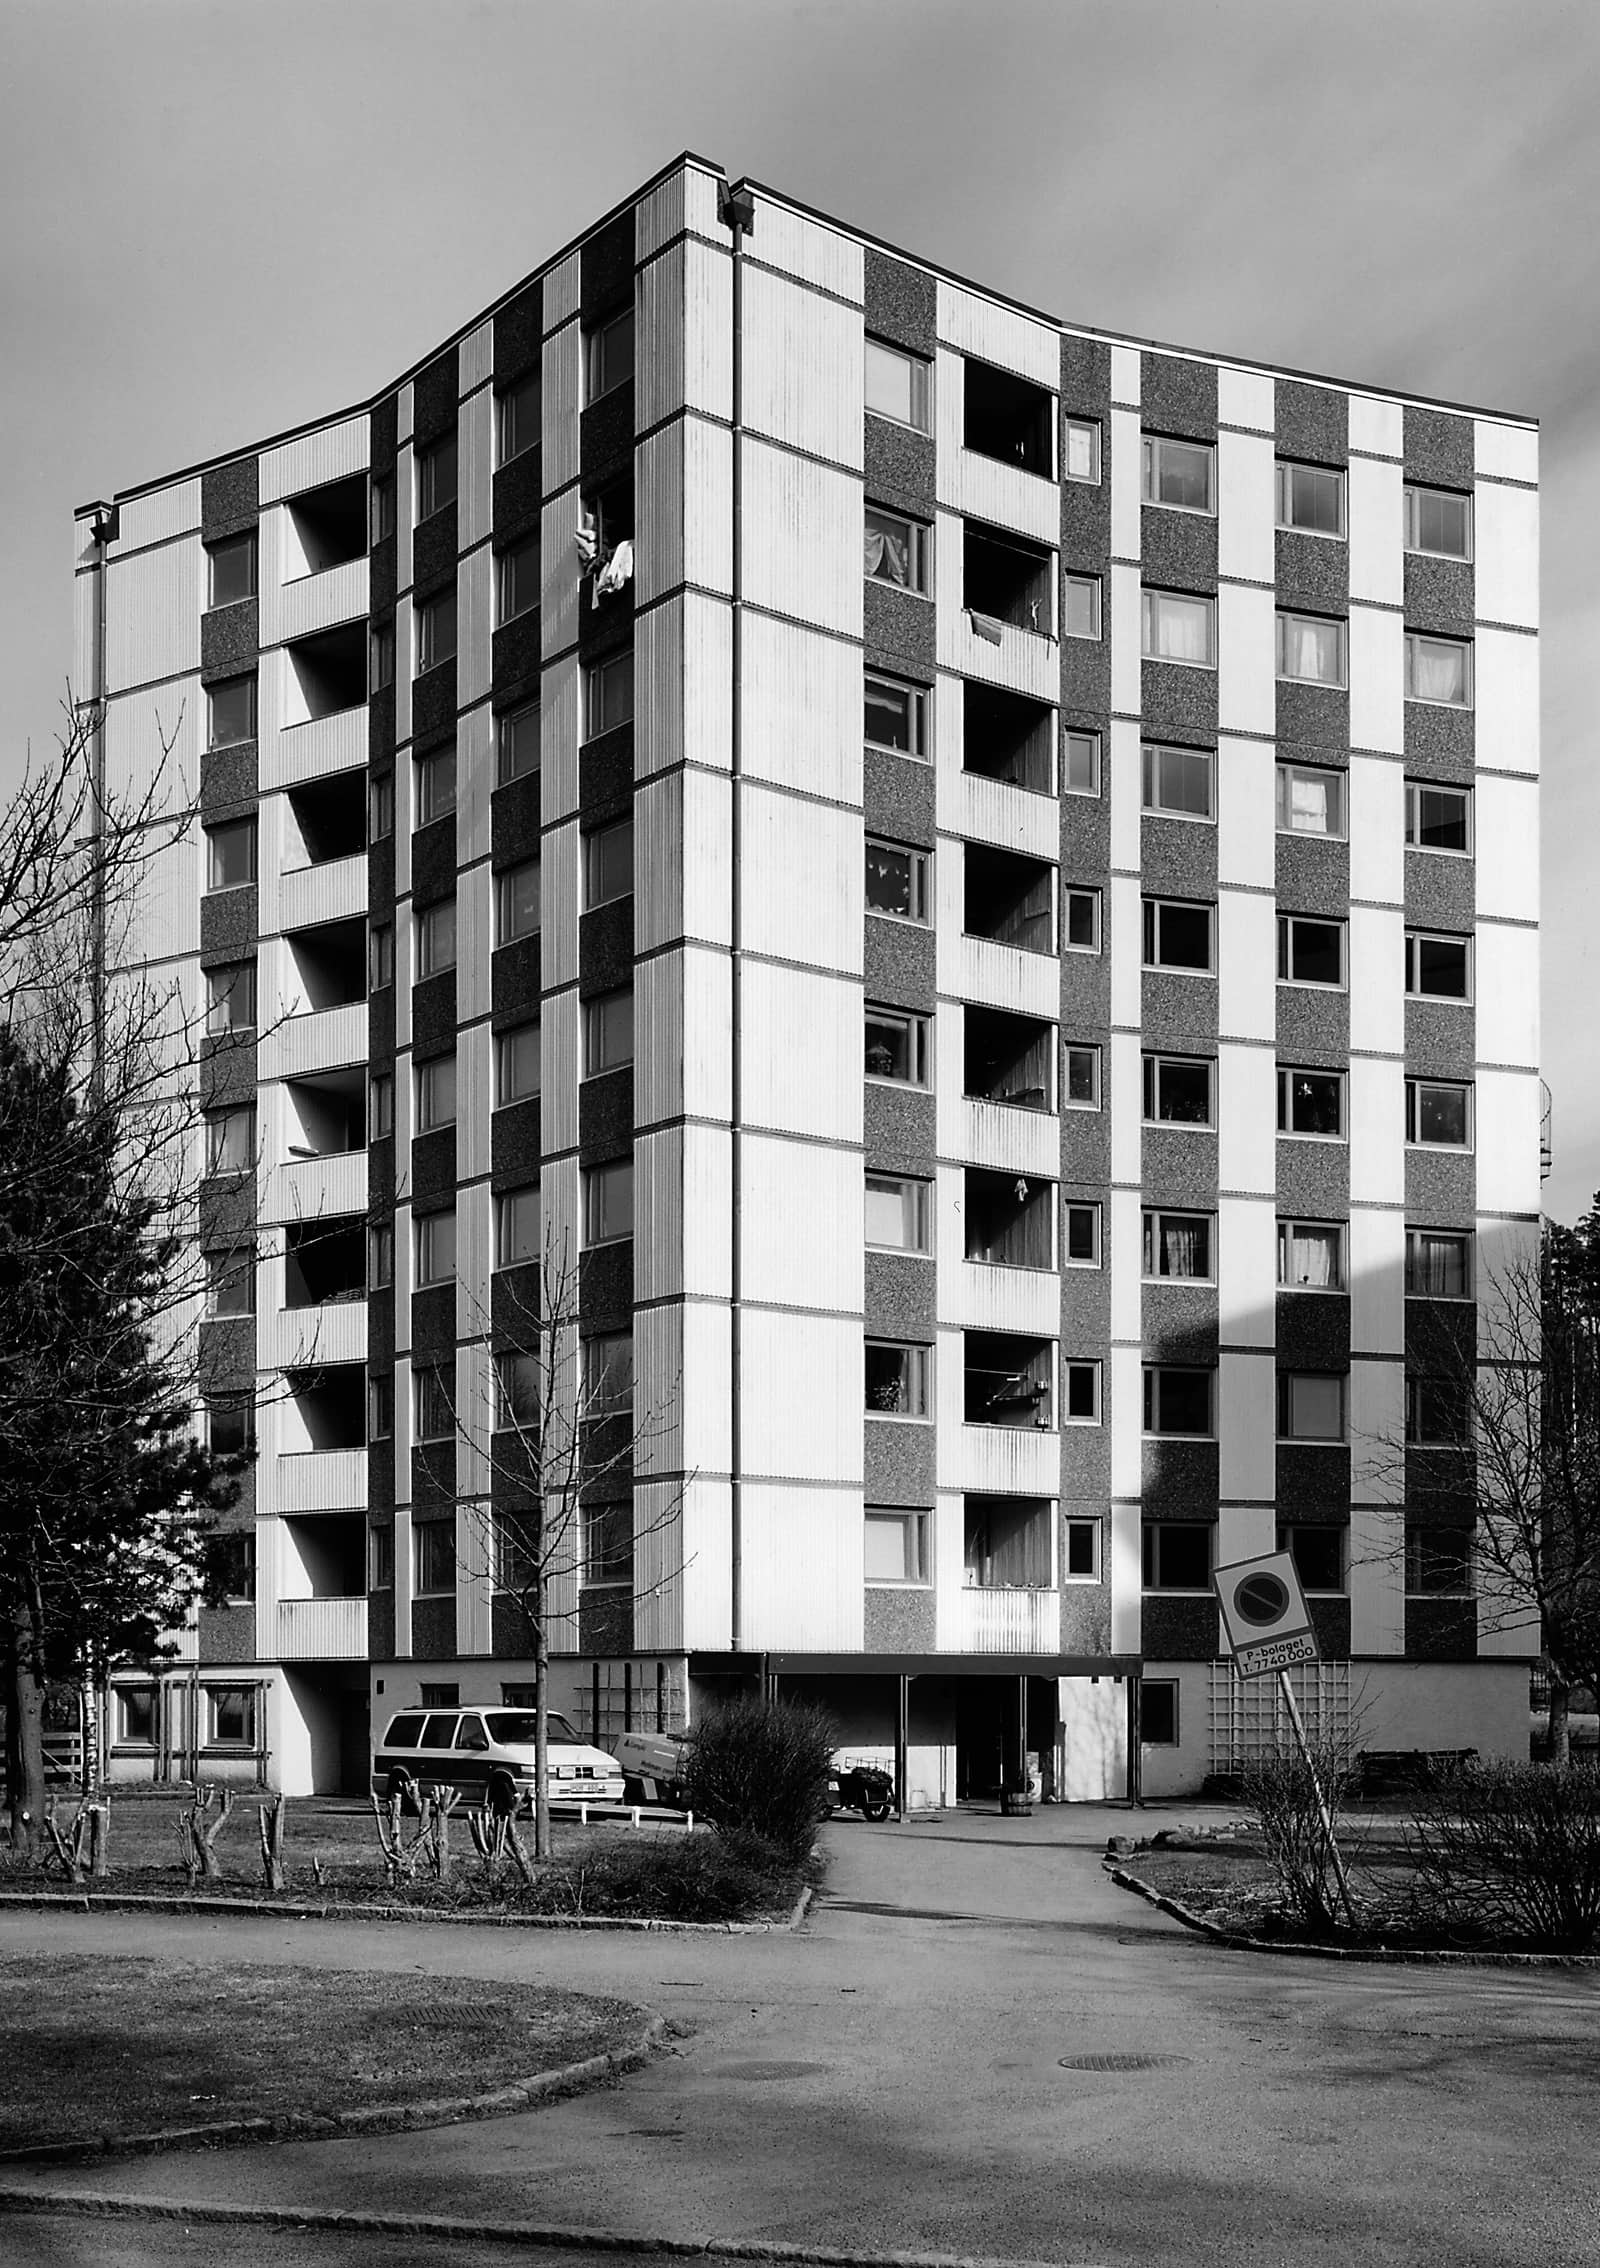 Lars Ågren, Kollektivhuset Stacken, Göteborg, Sweden, 1969-1980. The first small collective house of the multi-family dwelling “Swedish model”. © Claes Caldenby.